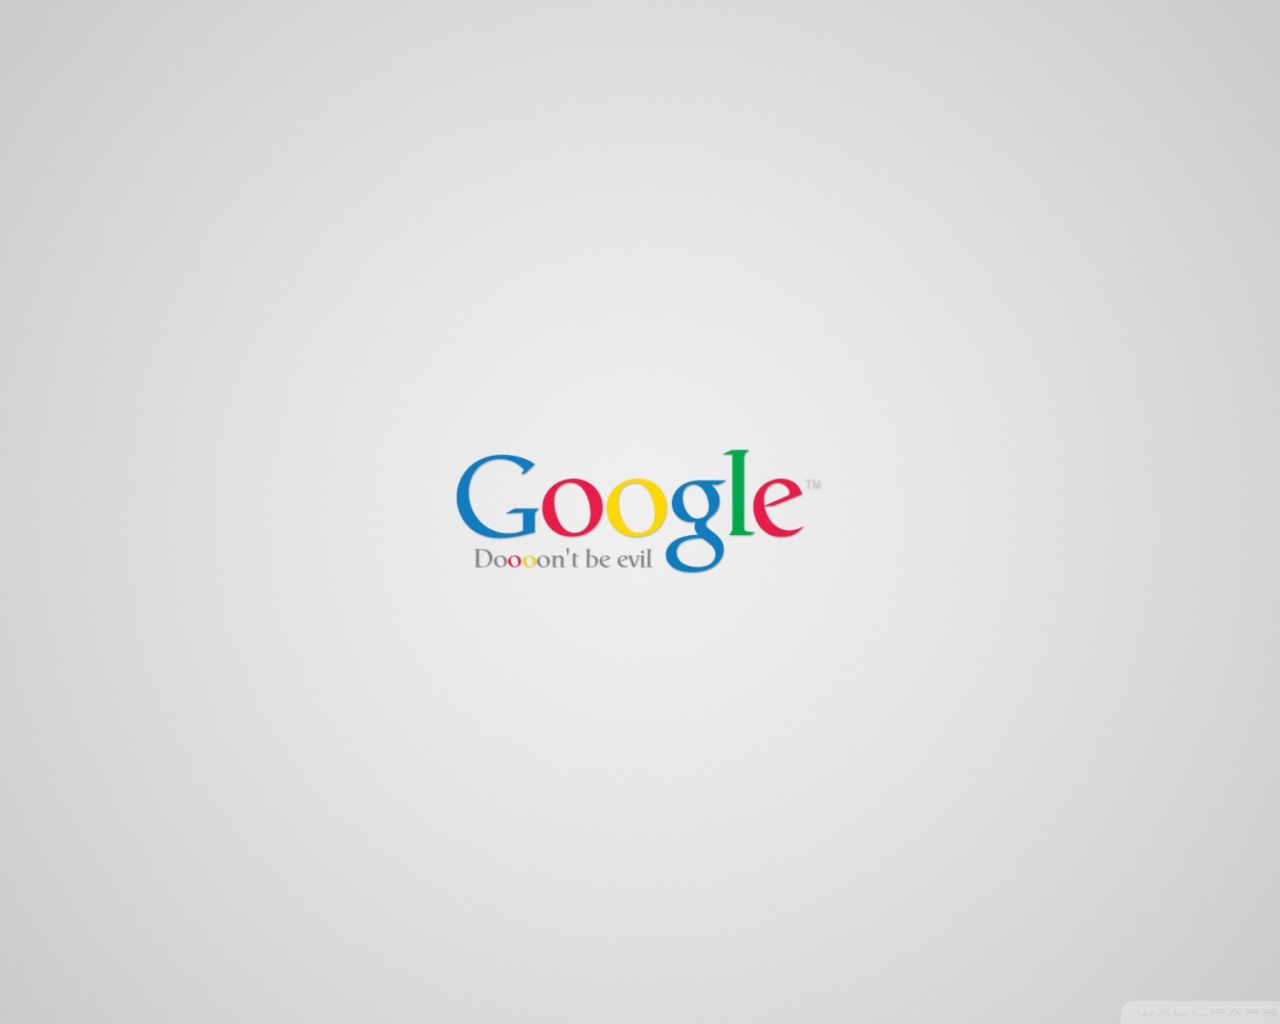 Google - Don't be evil wallpaper 1280x1024